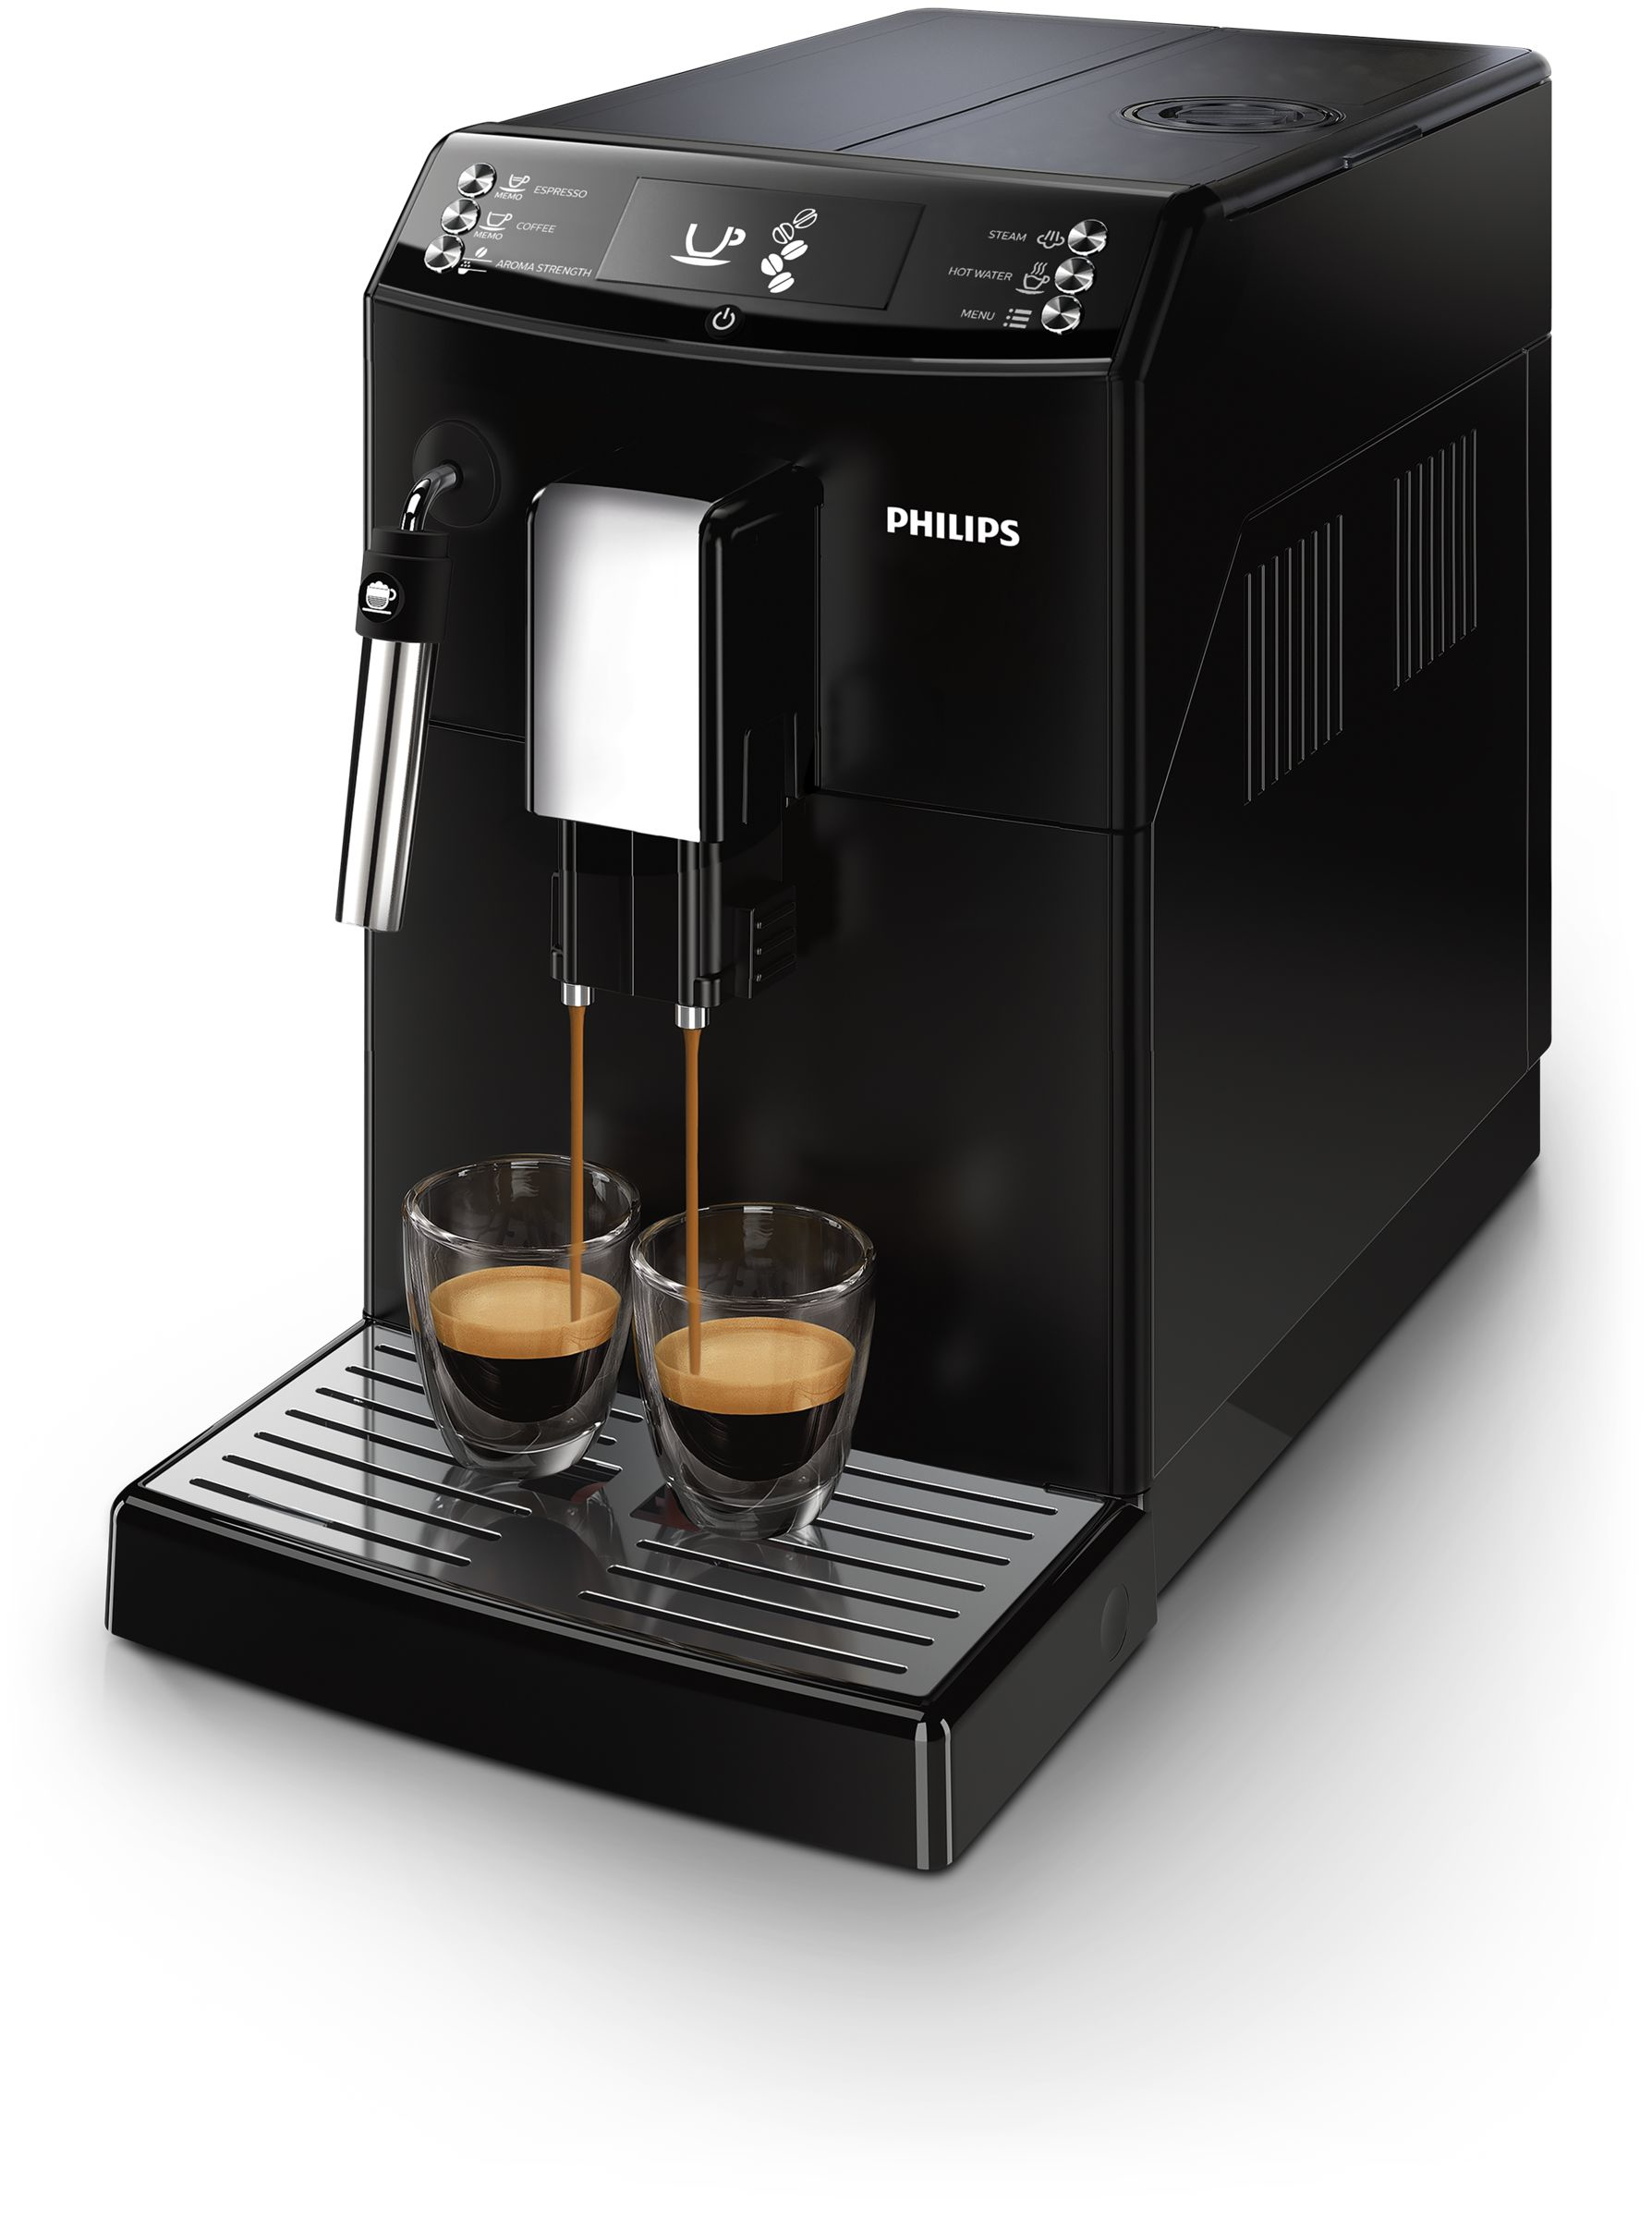 Philips 3100 series EP3510/00R1 coffee maker